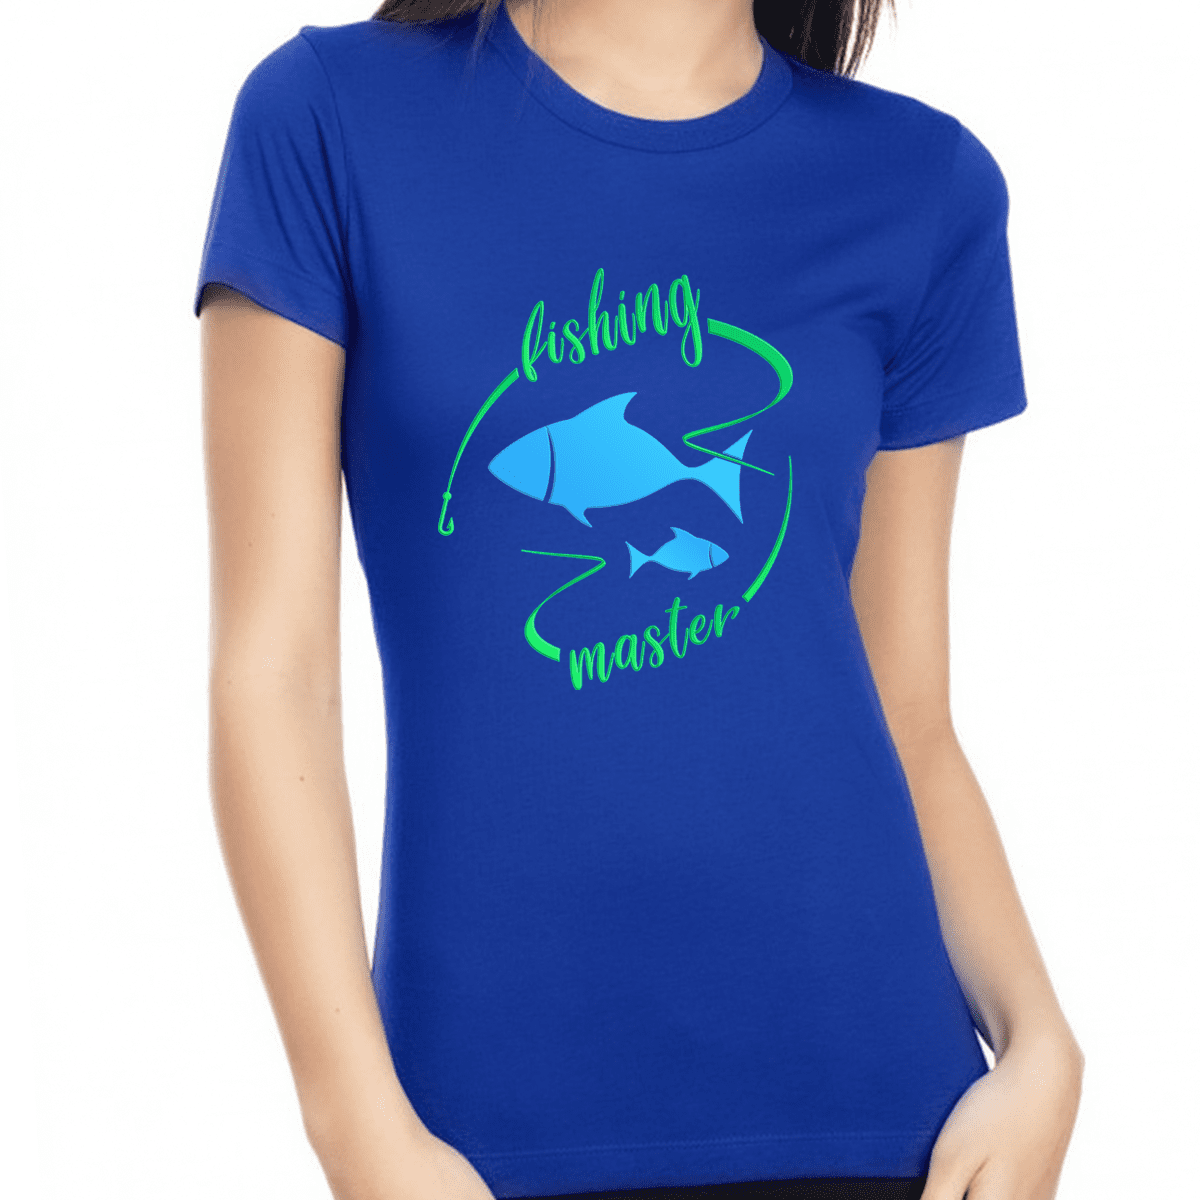 Purple Fishing Shirt